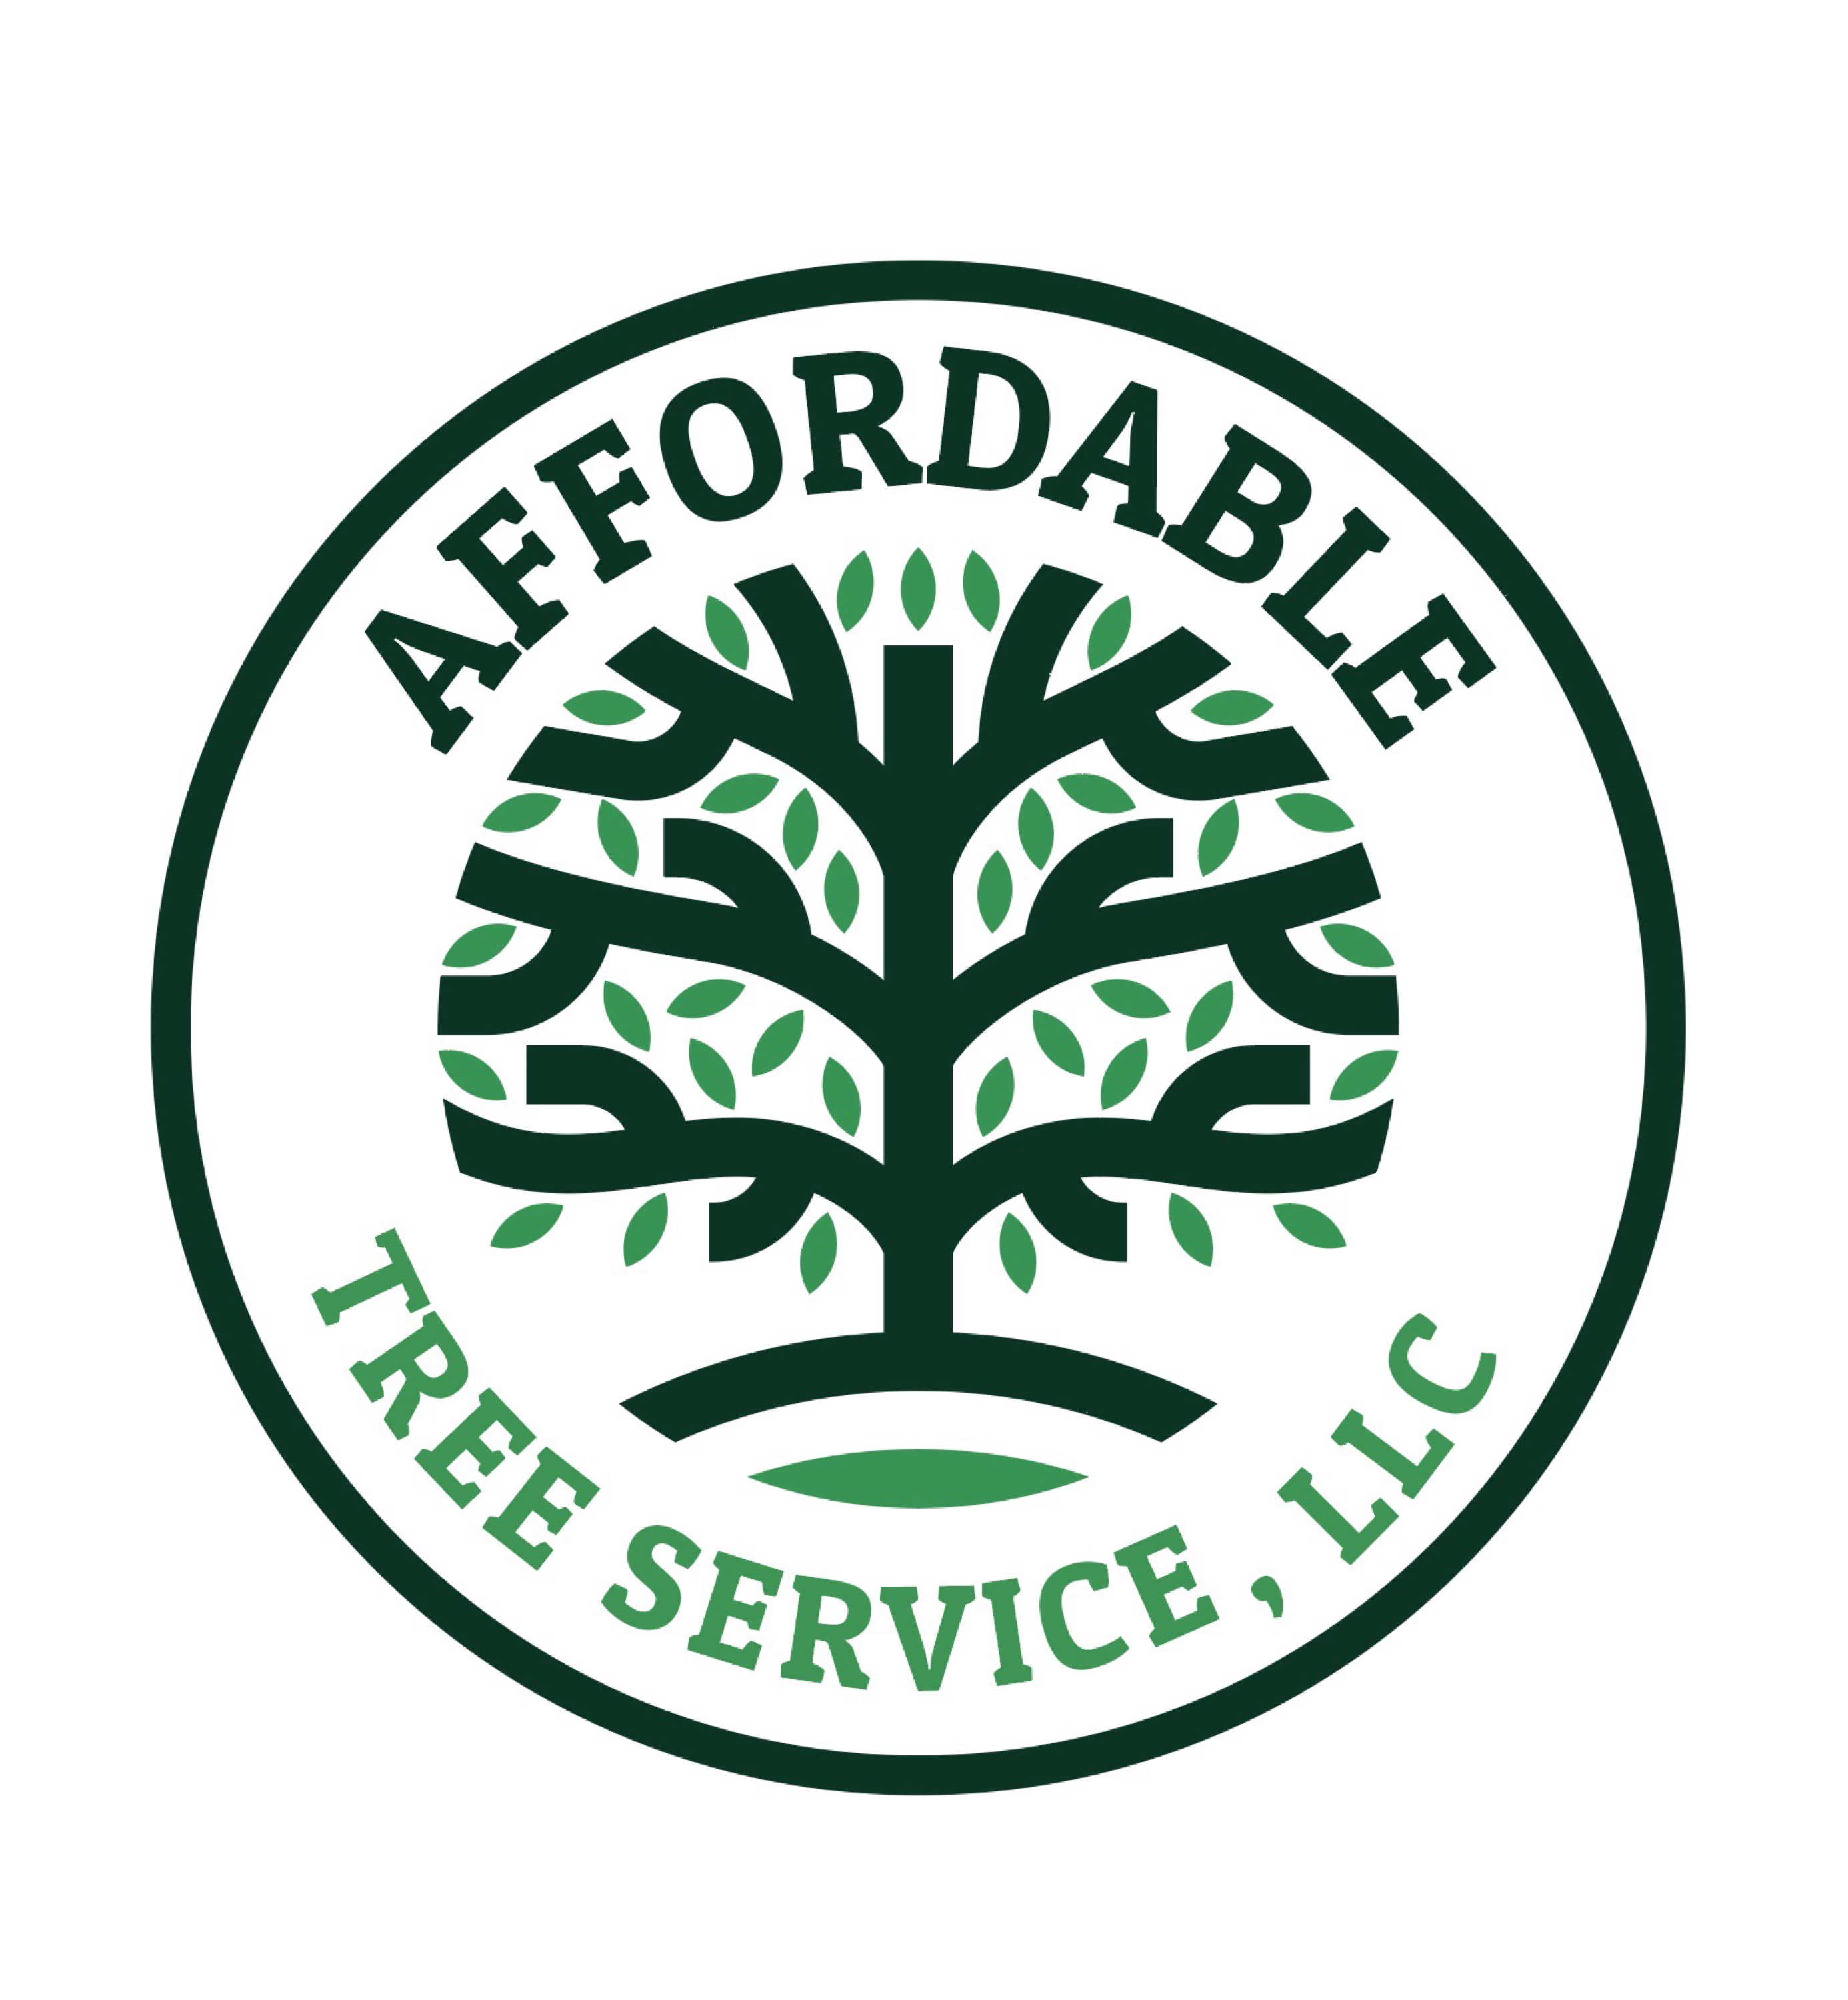 Affordable Tree Service LLC Logo